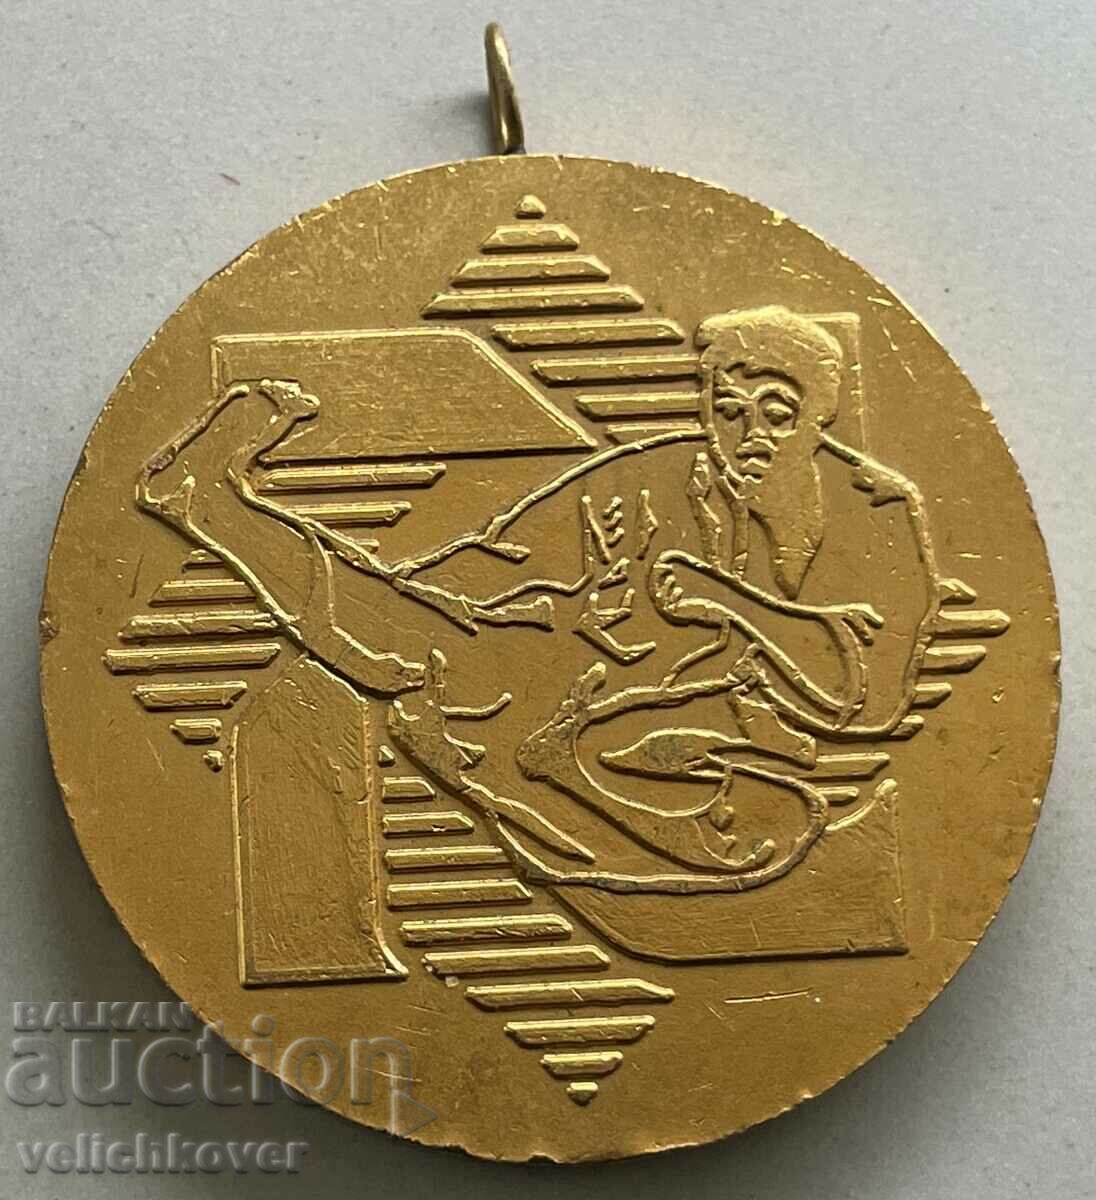 34223 Bulgaria medalie Karate Club Khan Asparuh 1989